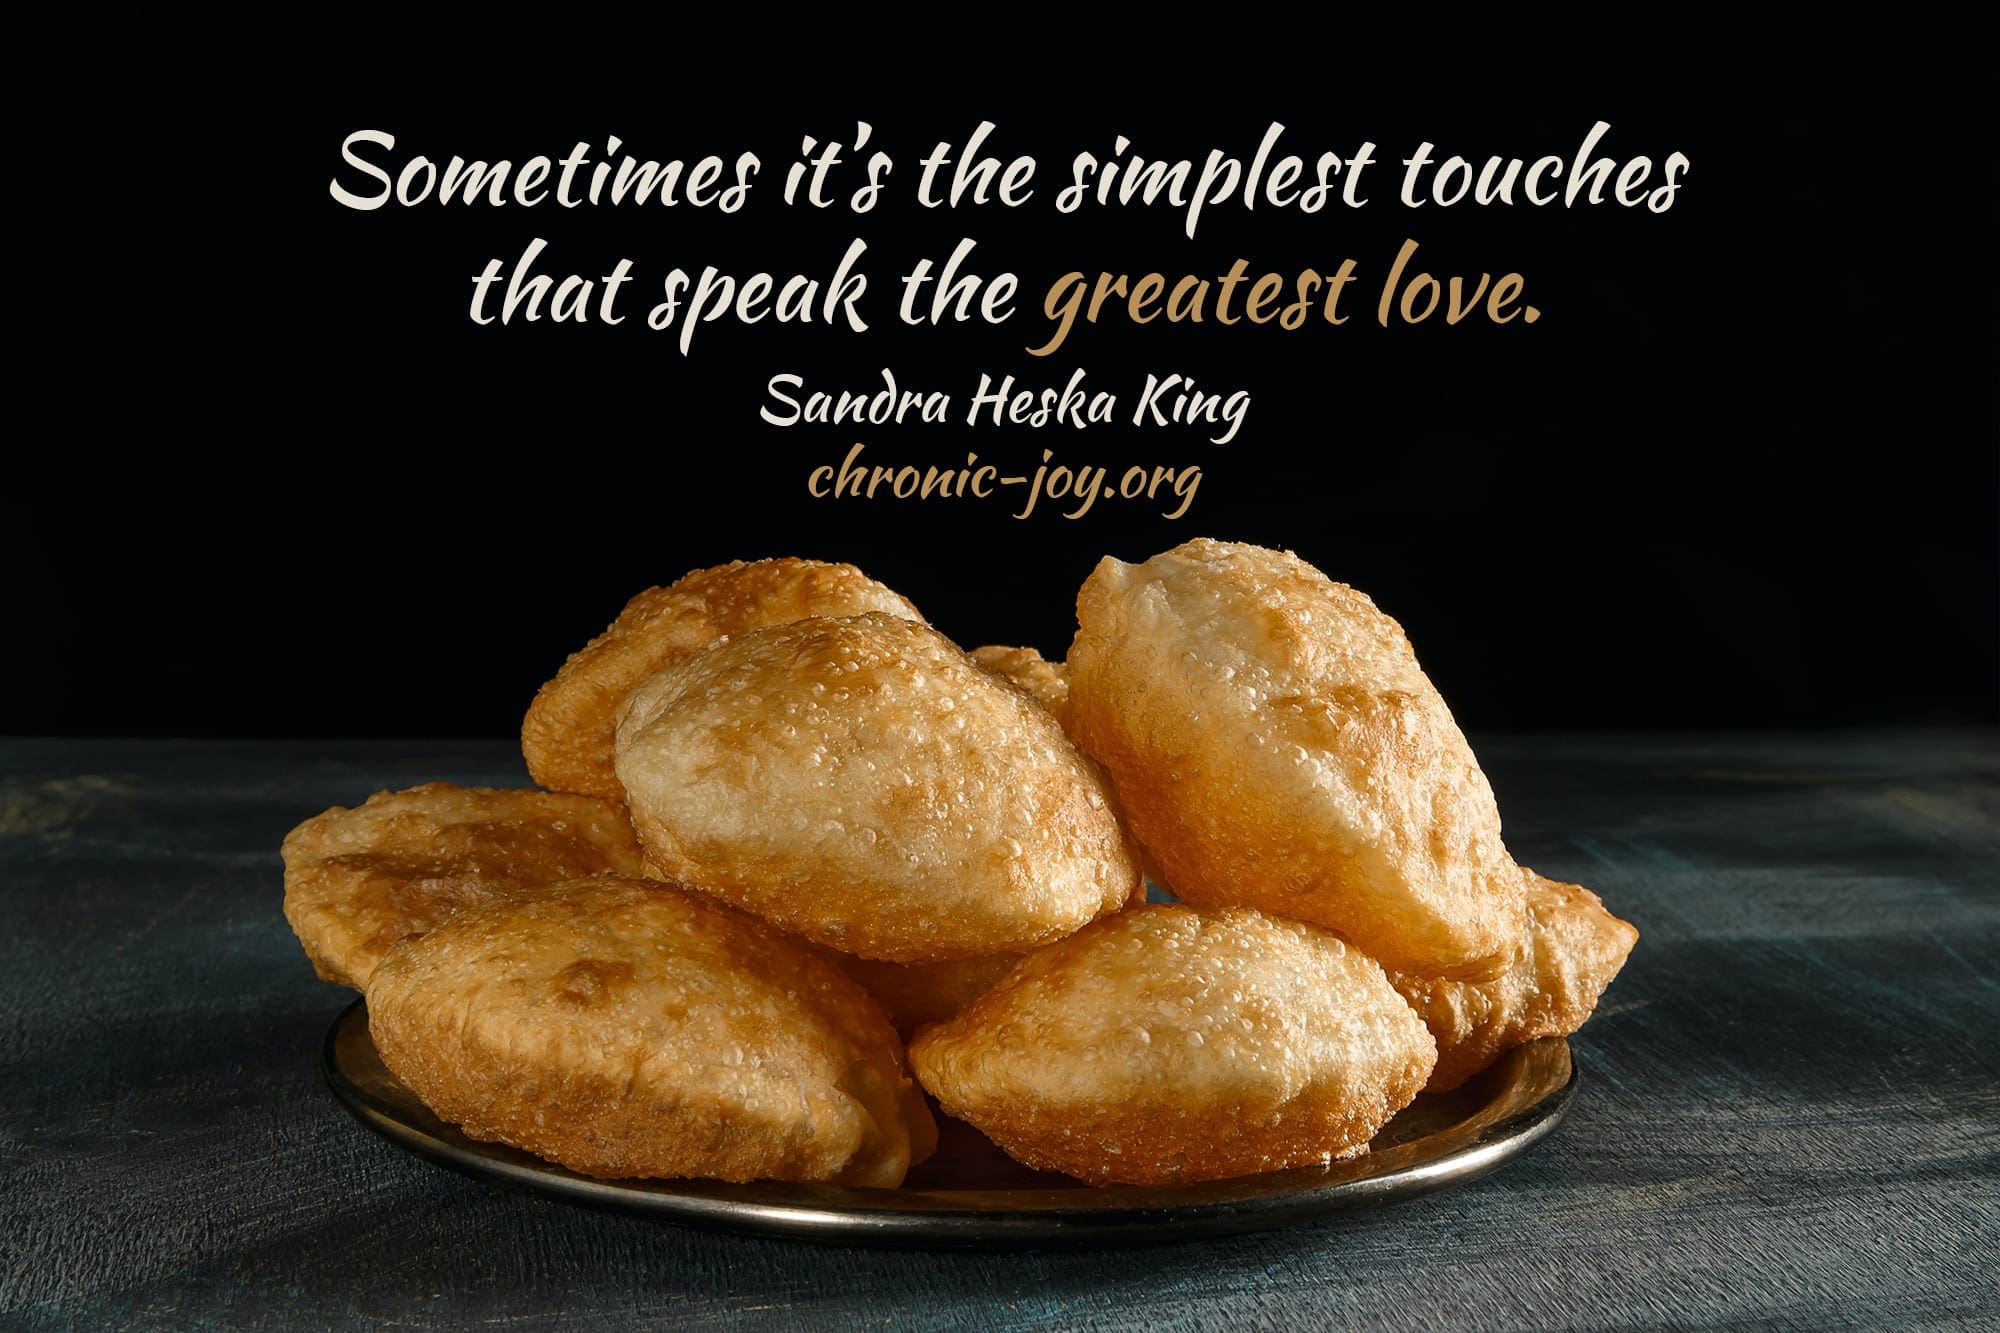 "Sometimes it's the simplest touches that speak the greatest love." Sandra Heska King